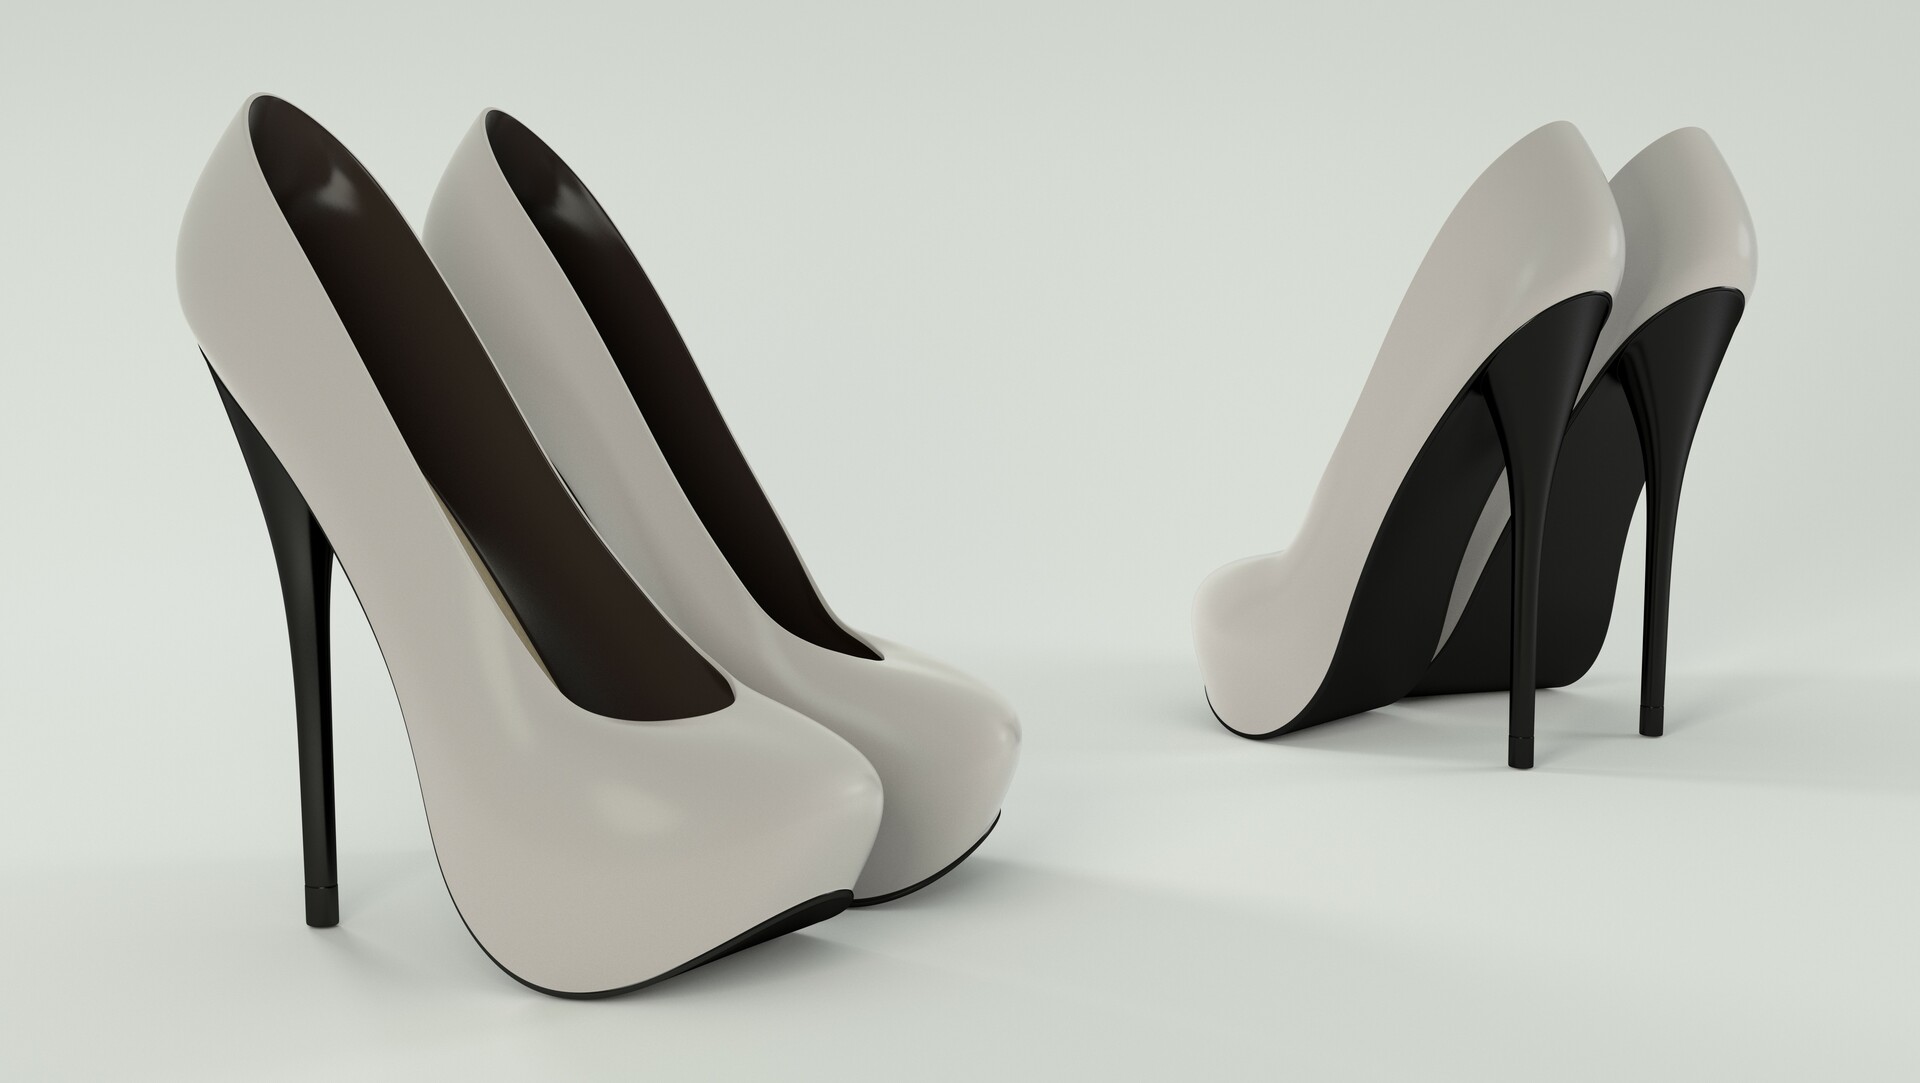 ArtStation - High heel shoes white